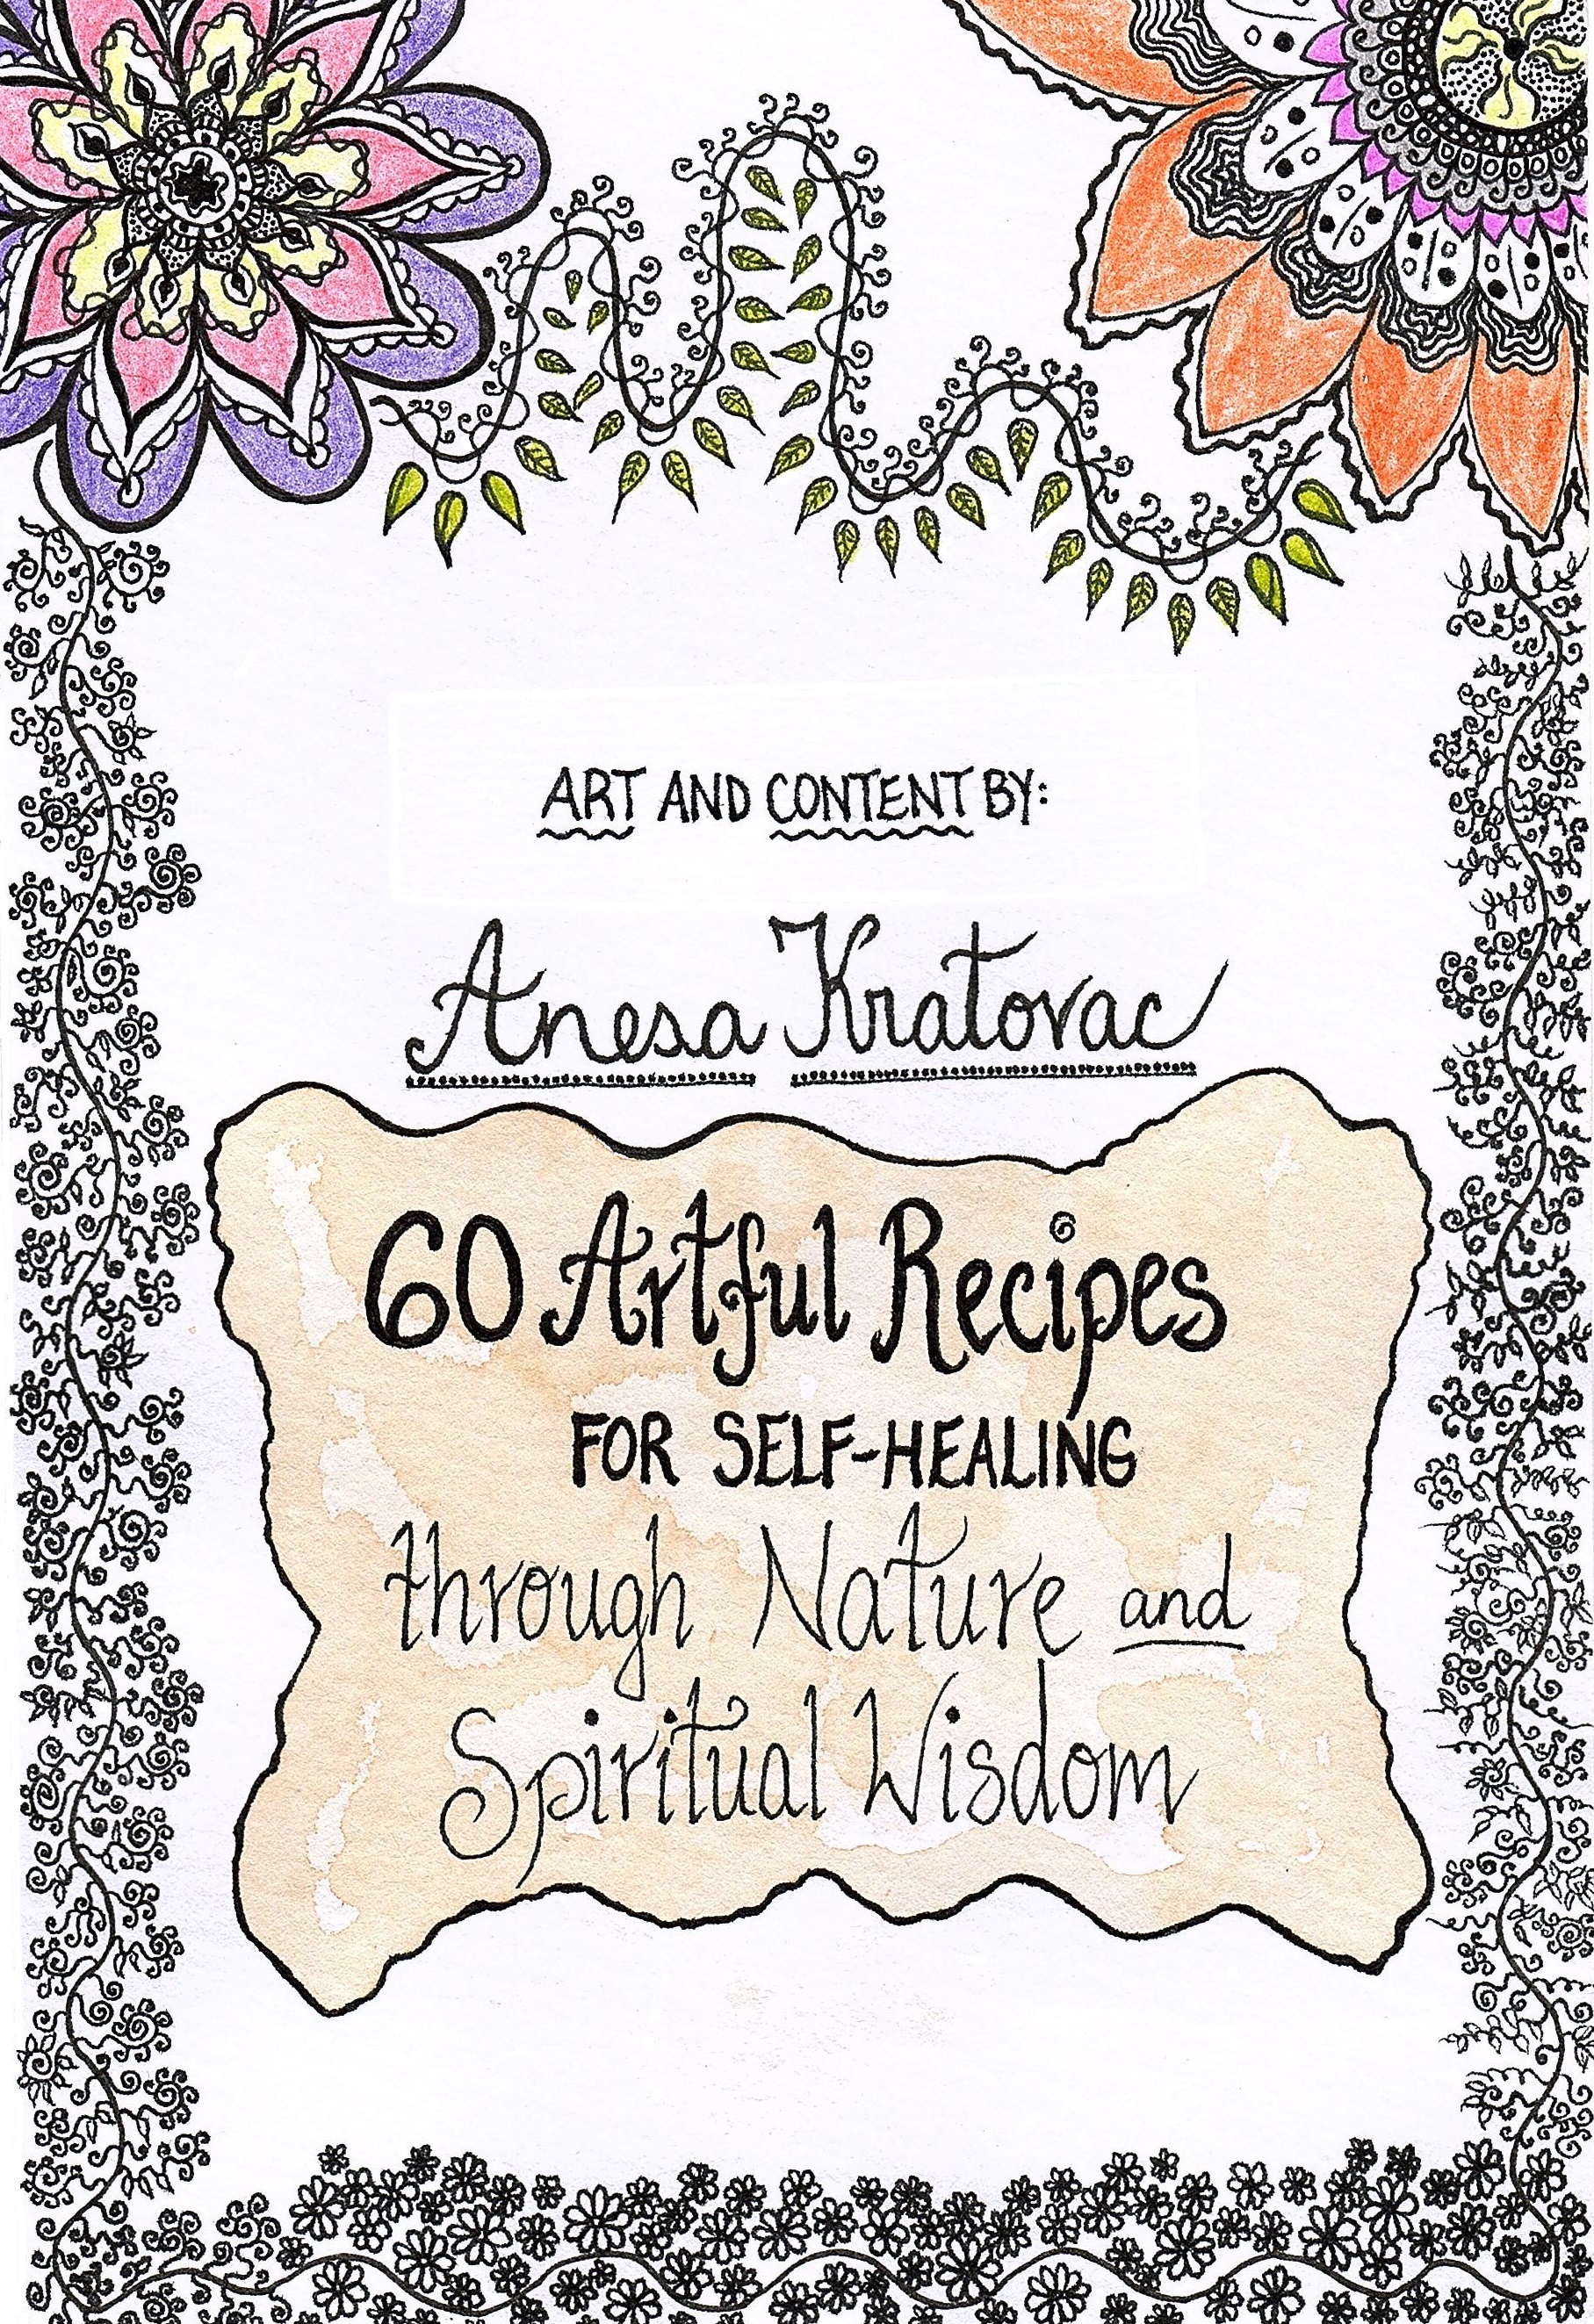 FREE: 60 Artful Recipes for Self-Healing through Nature and Spiritual Wisdom by Anesa Kratovac